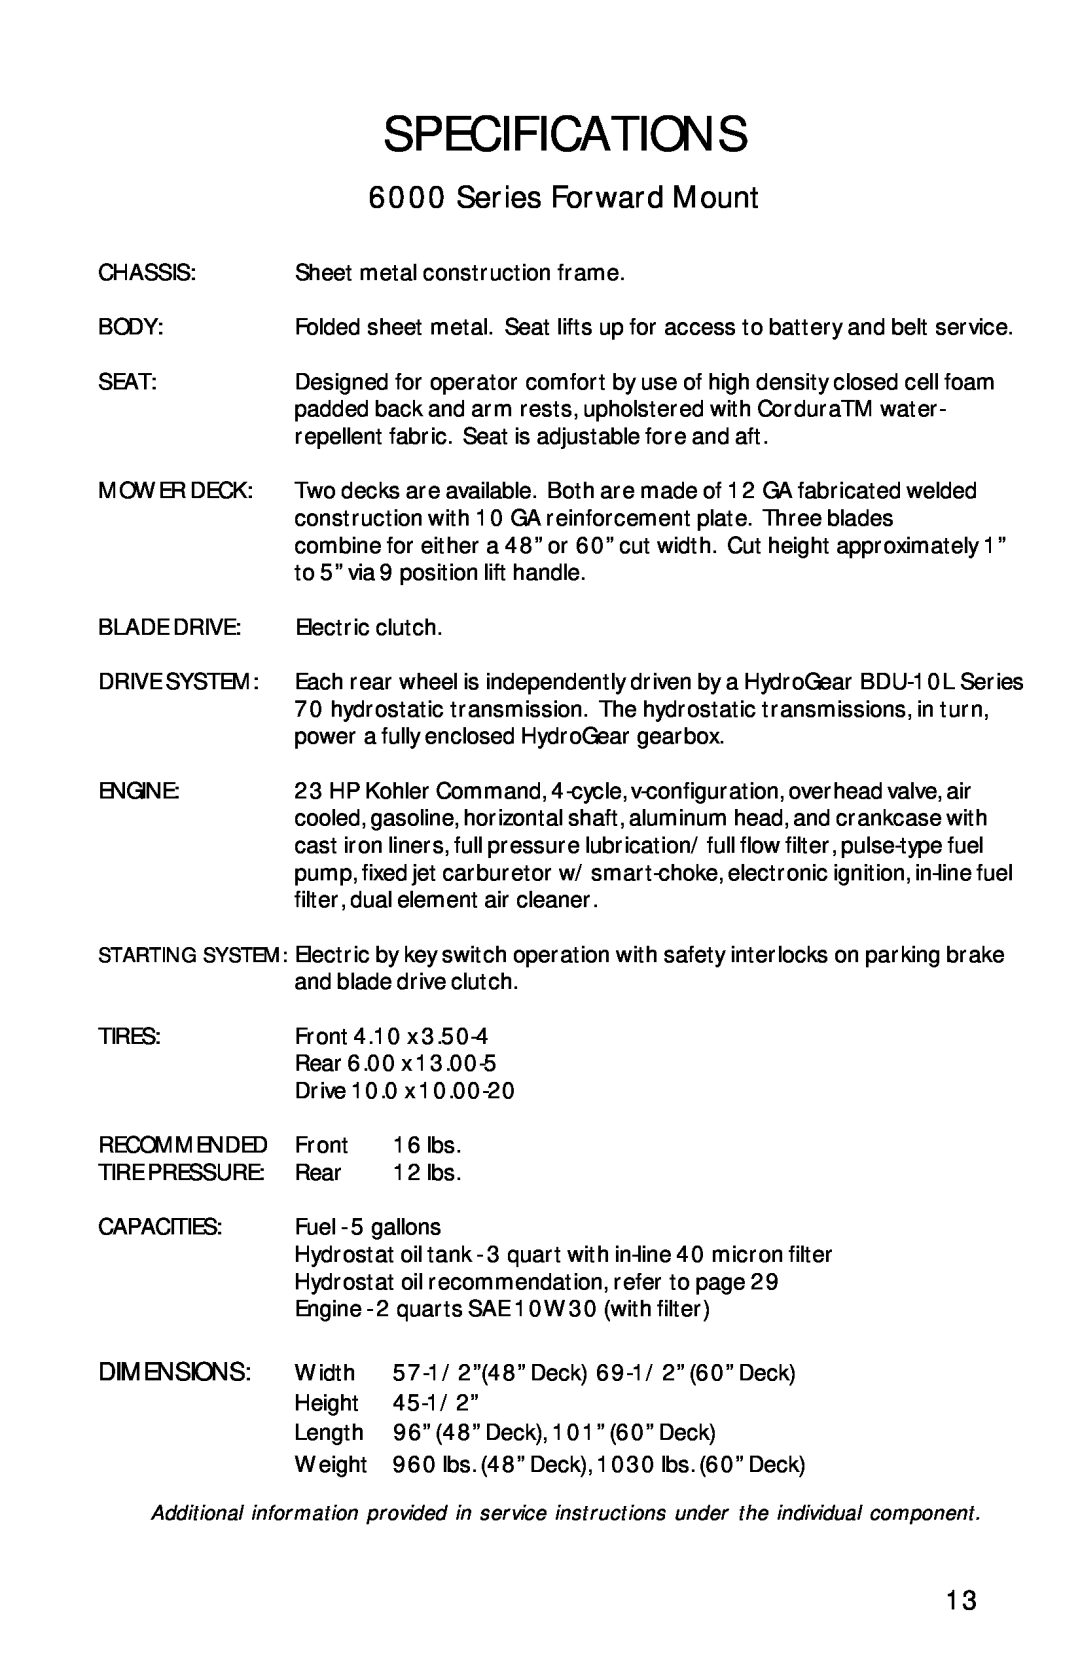 Dixon 13090-0601, ZTR 6023 manual Specifications, Series Forward Mount 